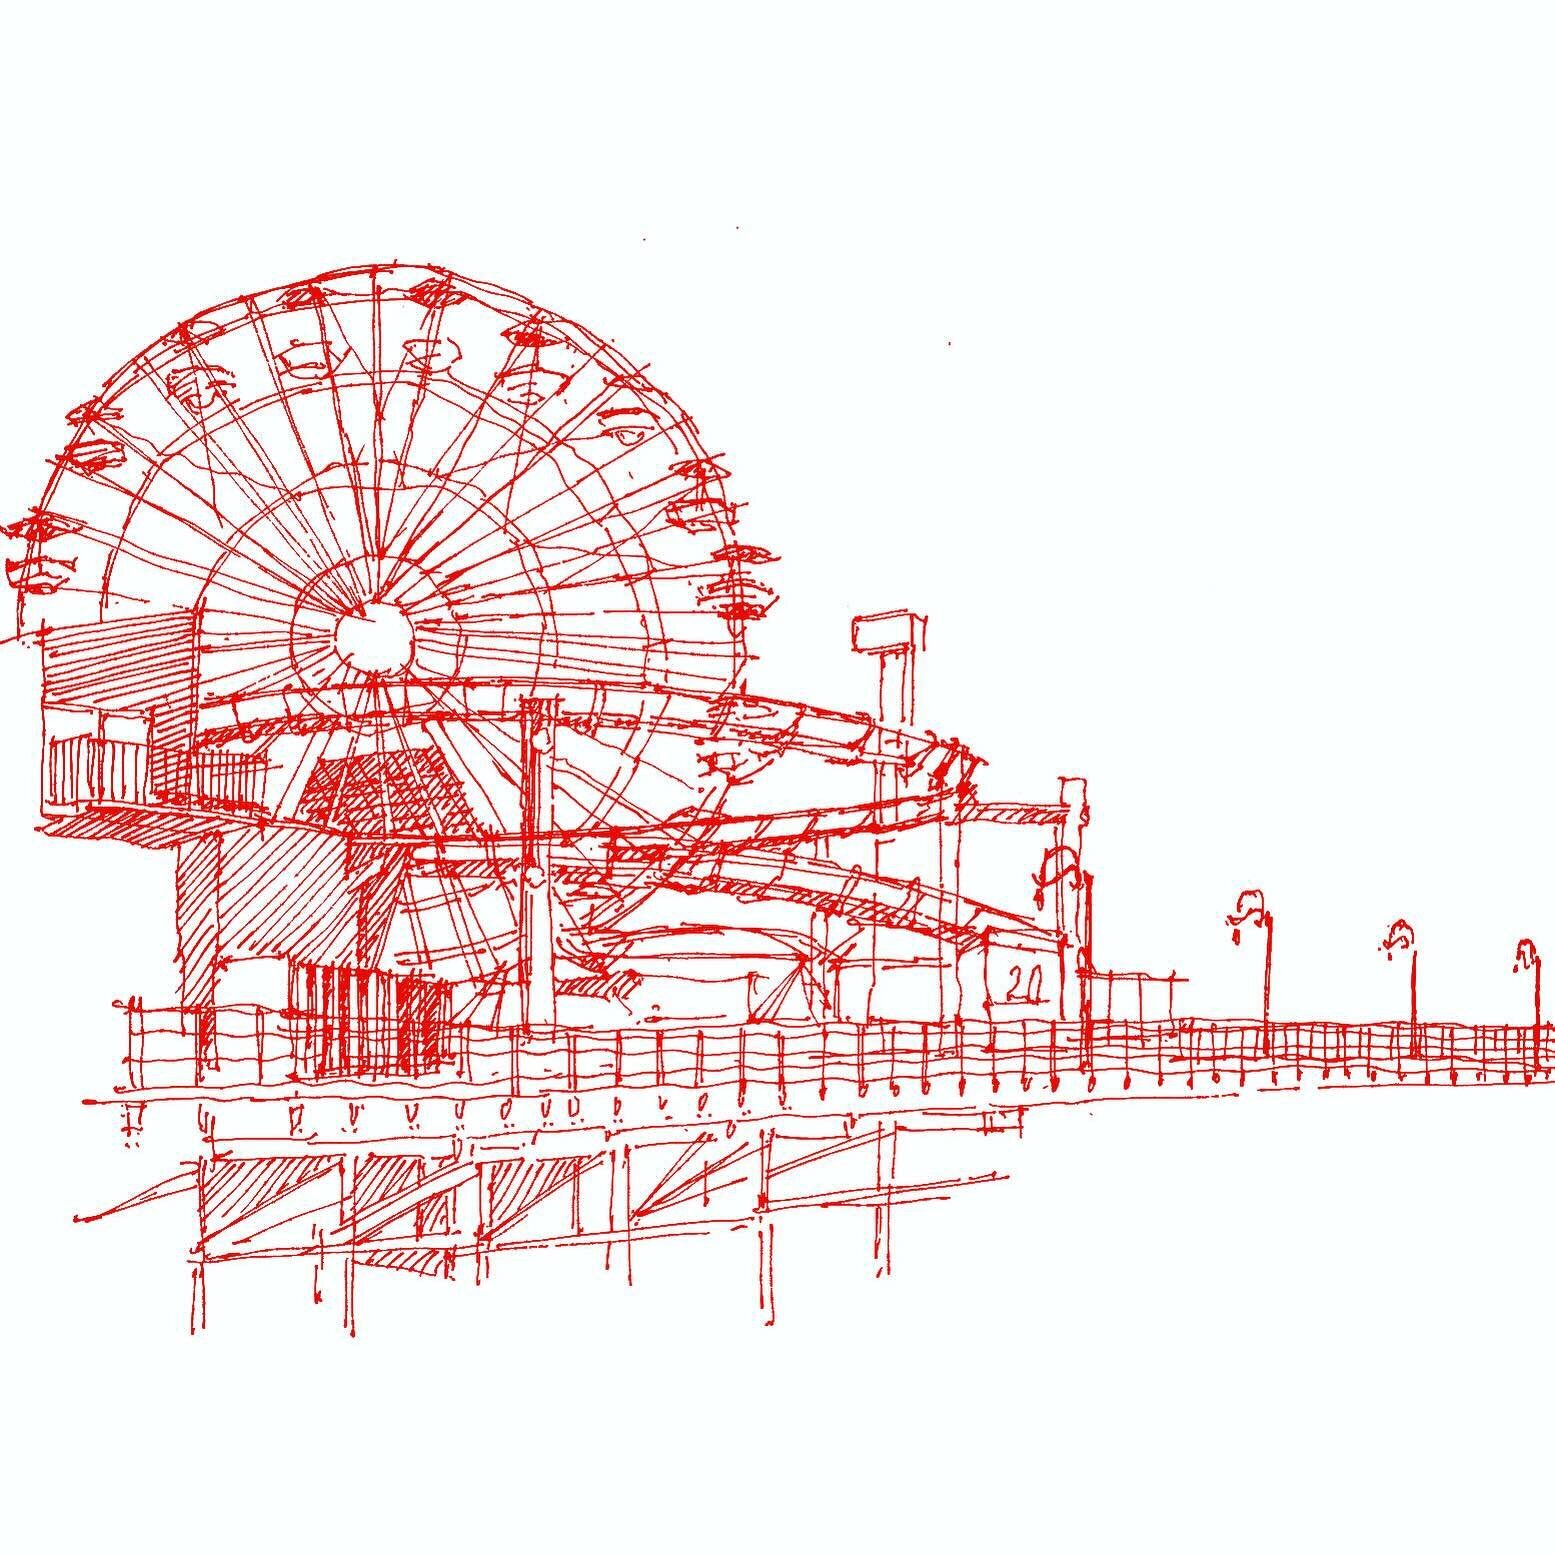 The Pacific Wheel, the iconic Santa Monica landmark, was drawn en plein air (on location) from the Santa Monica Pier.

Ink colors are customizable upon request. 

-
-
-
-
-
@pacpark
@santamonicapier
#redink #interiorart 
#pleinairdrawing #californiap